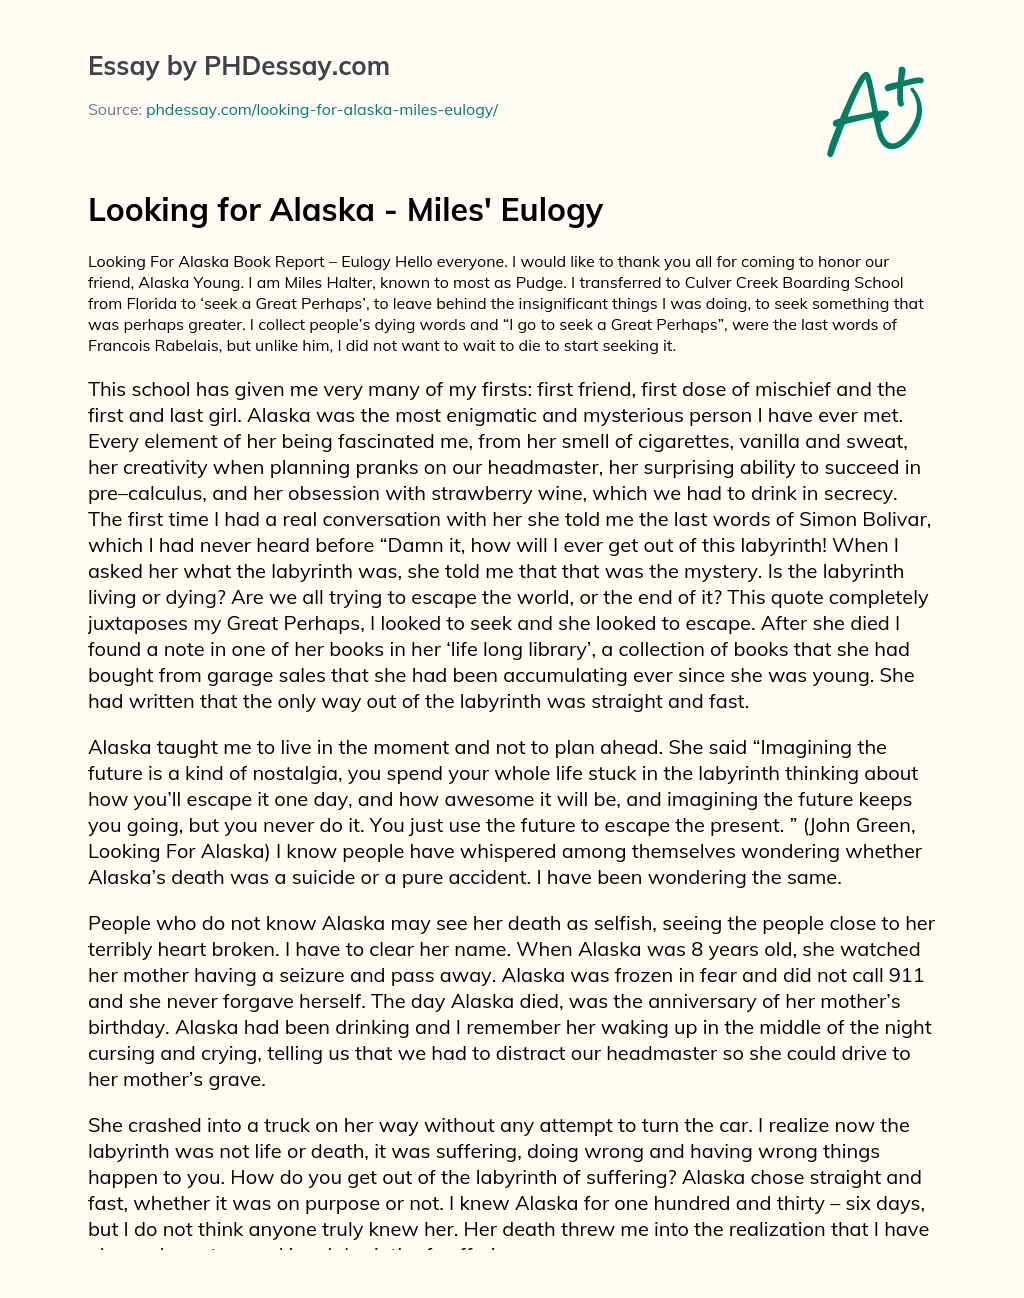 Looking for Alaska – Miles’ Eulogy essay